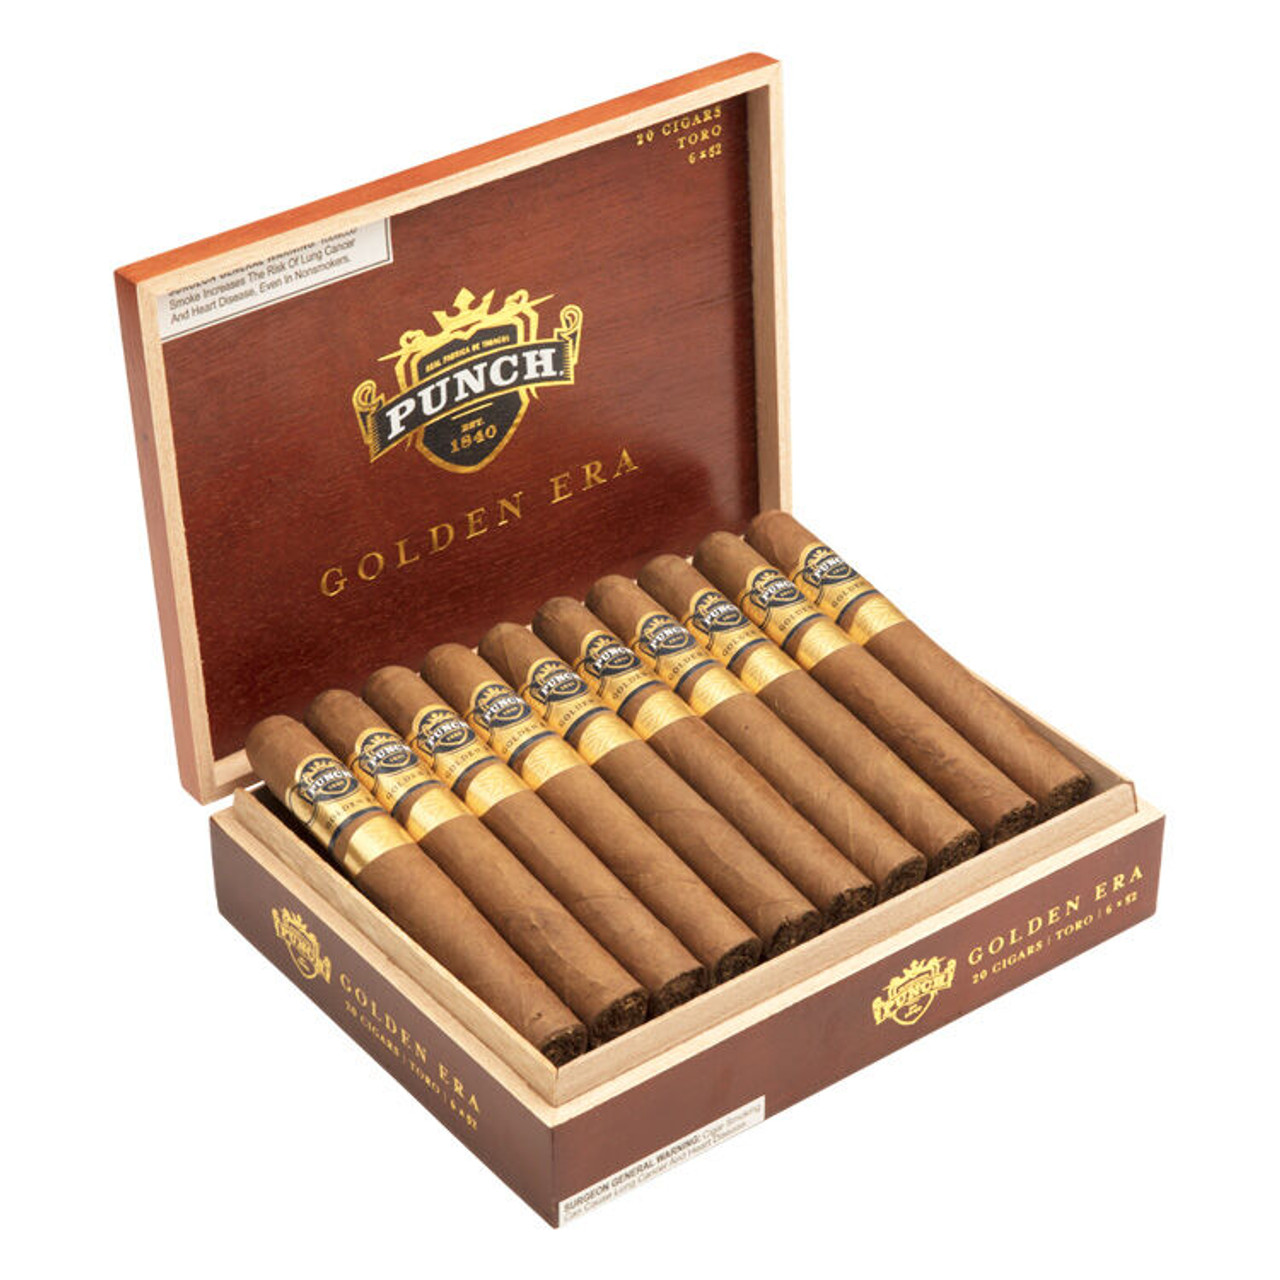 Punch Golden Era Toro Cigars - 6 x 52 (Box of 20) Open